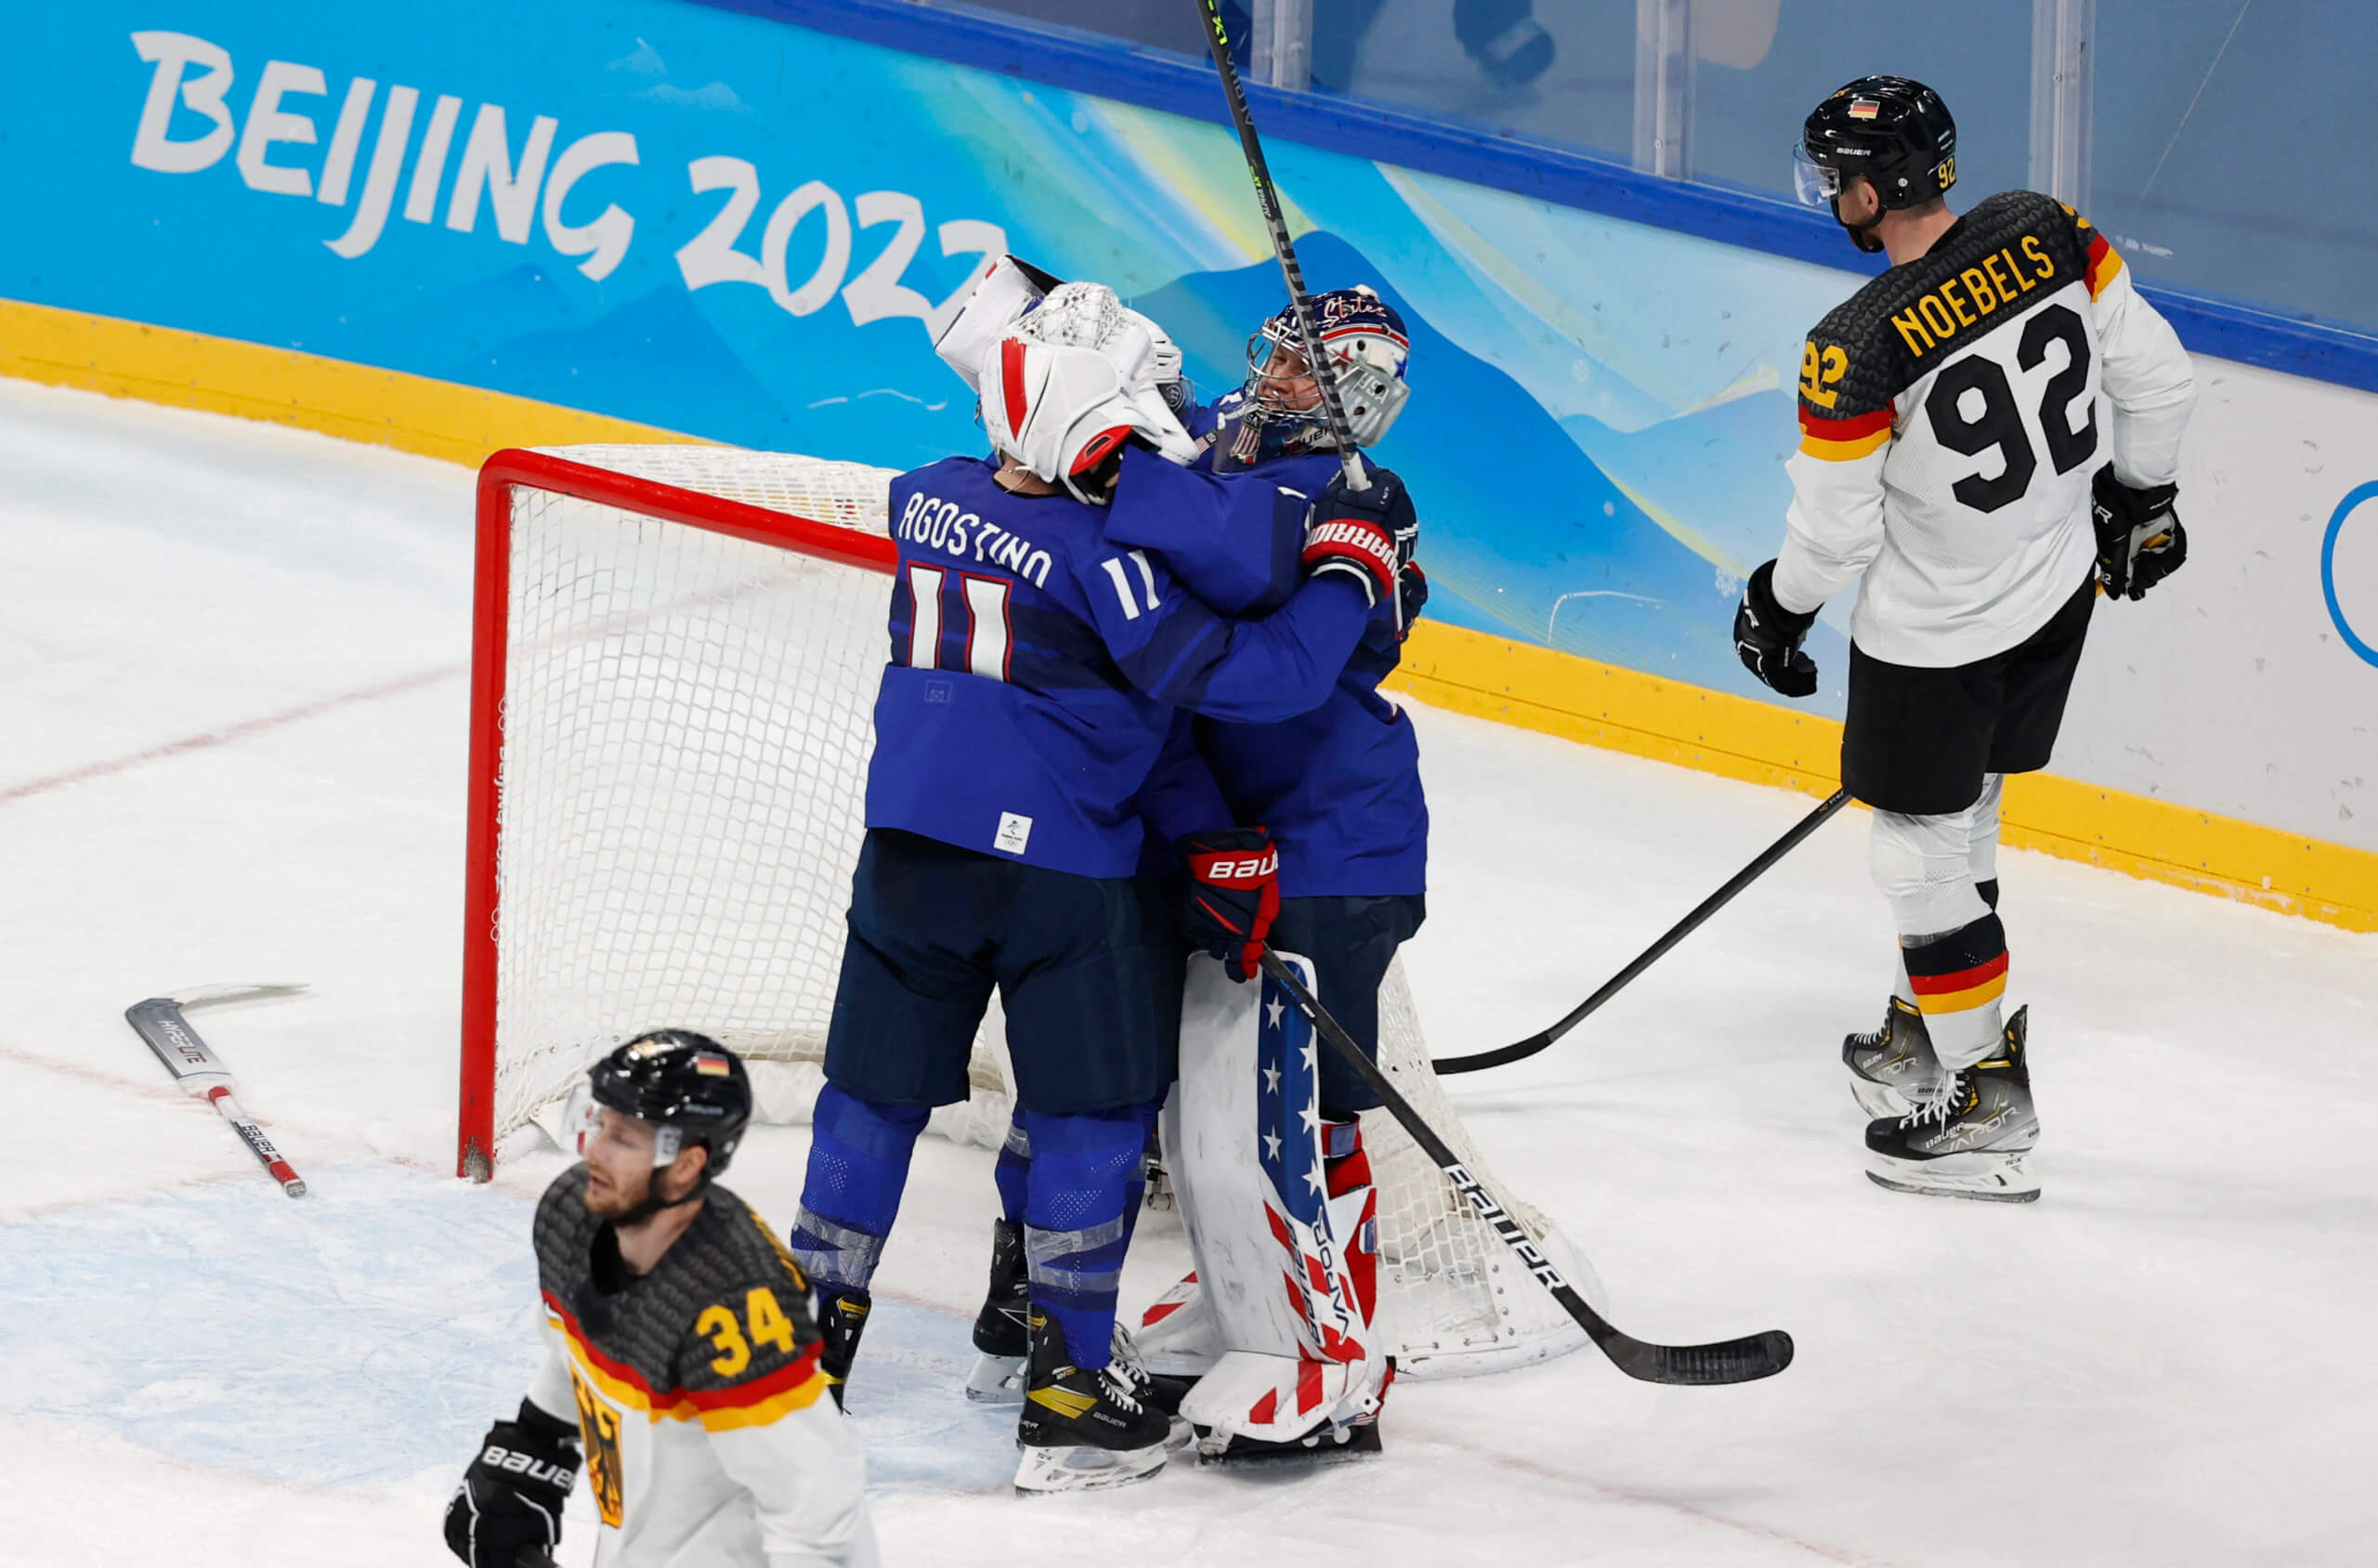 2022 Winter Olympics USA mens hockey comes back to beat Germany, win Group A amNewYork